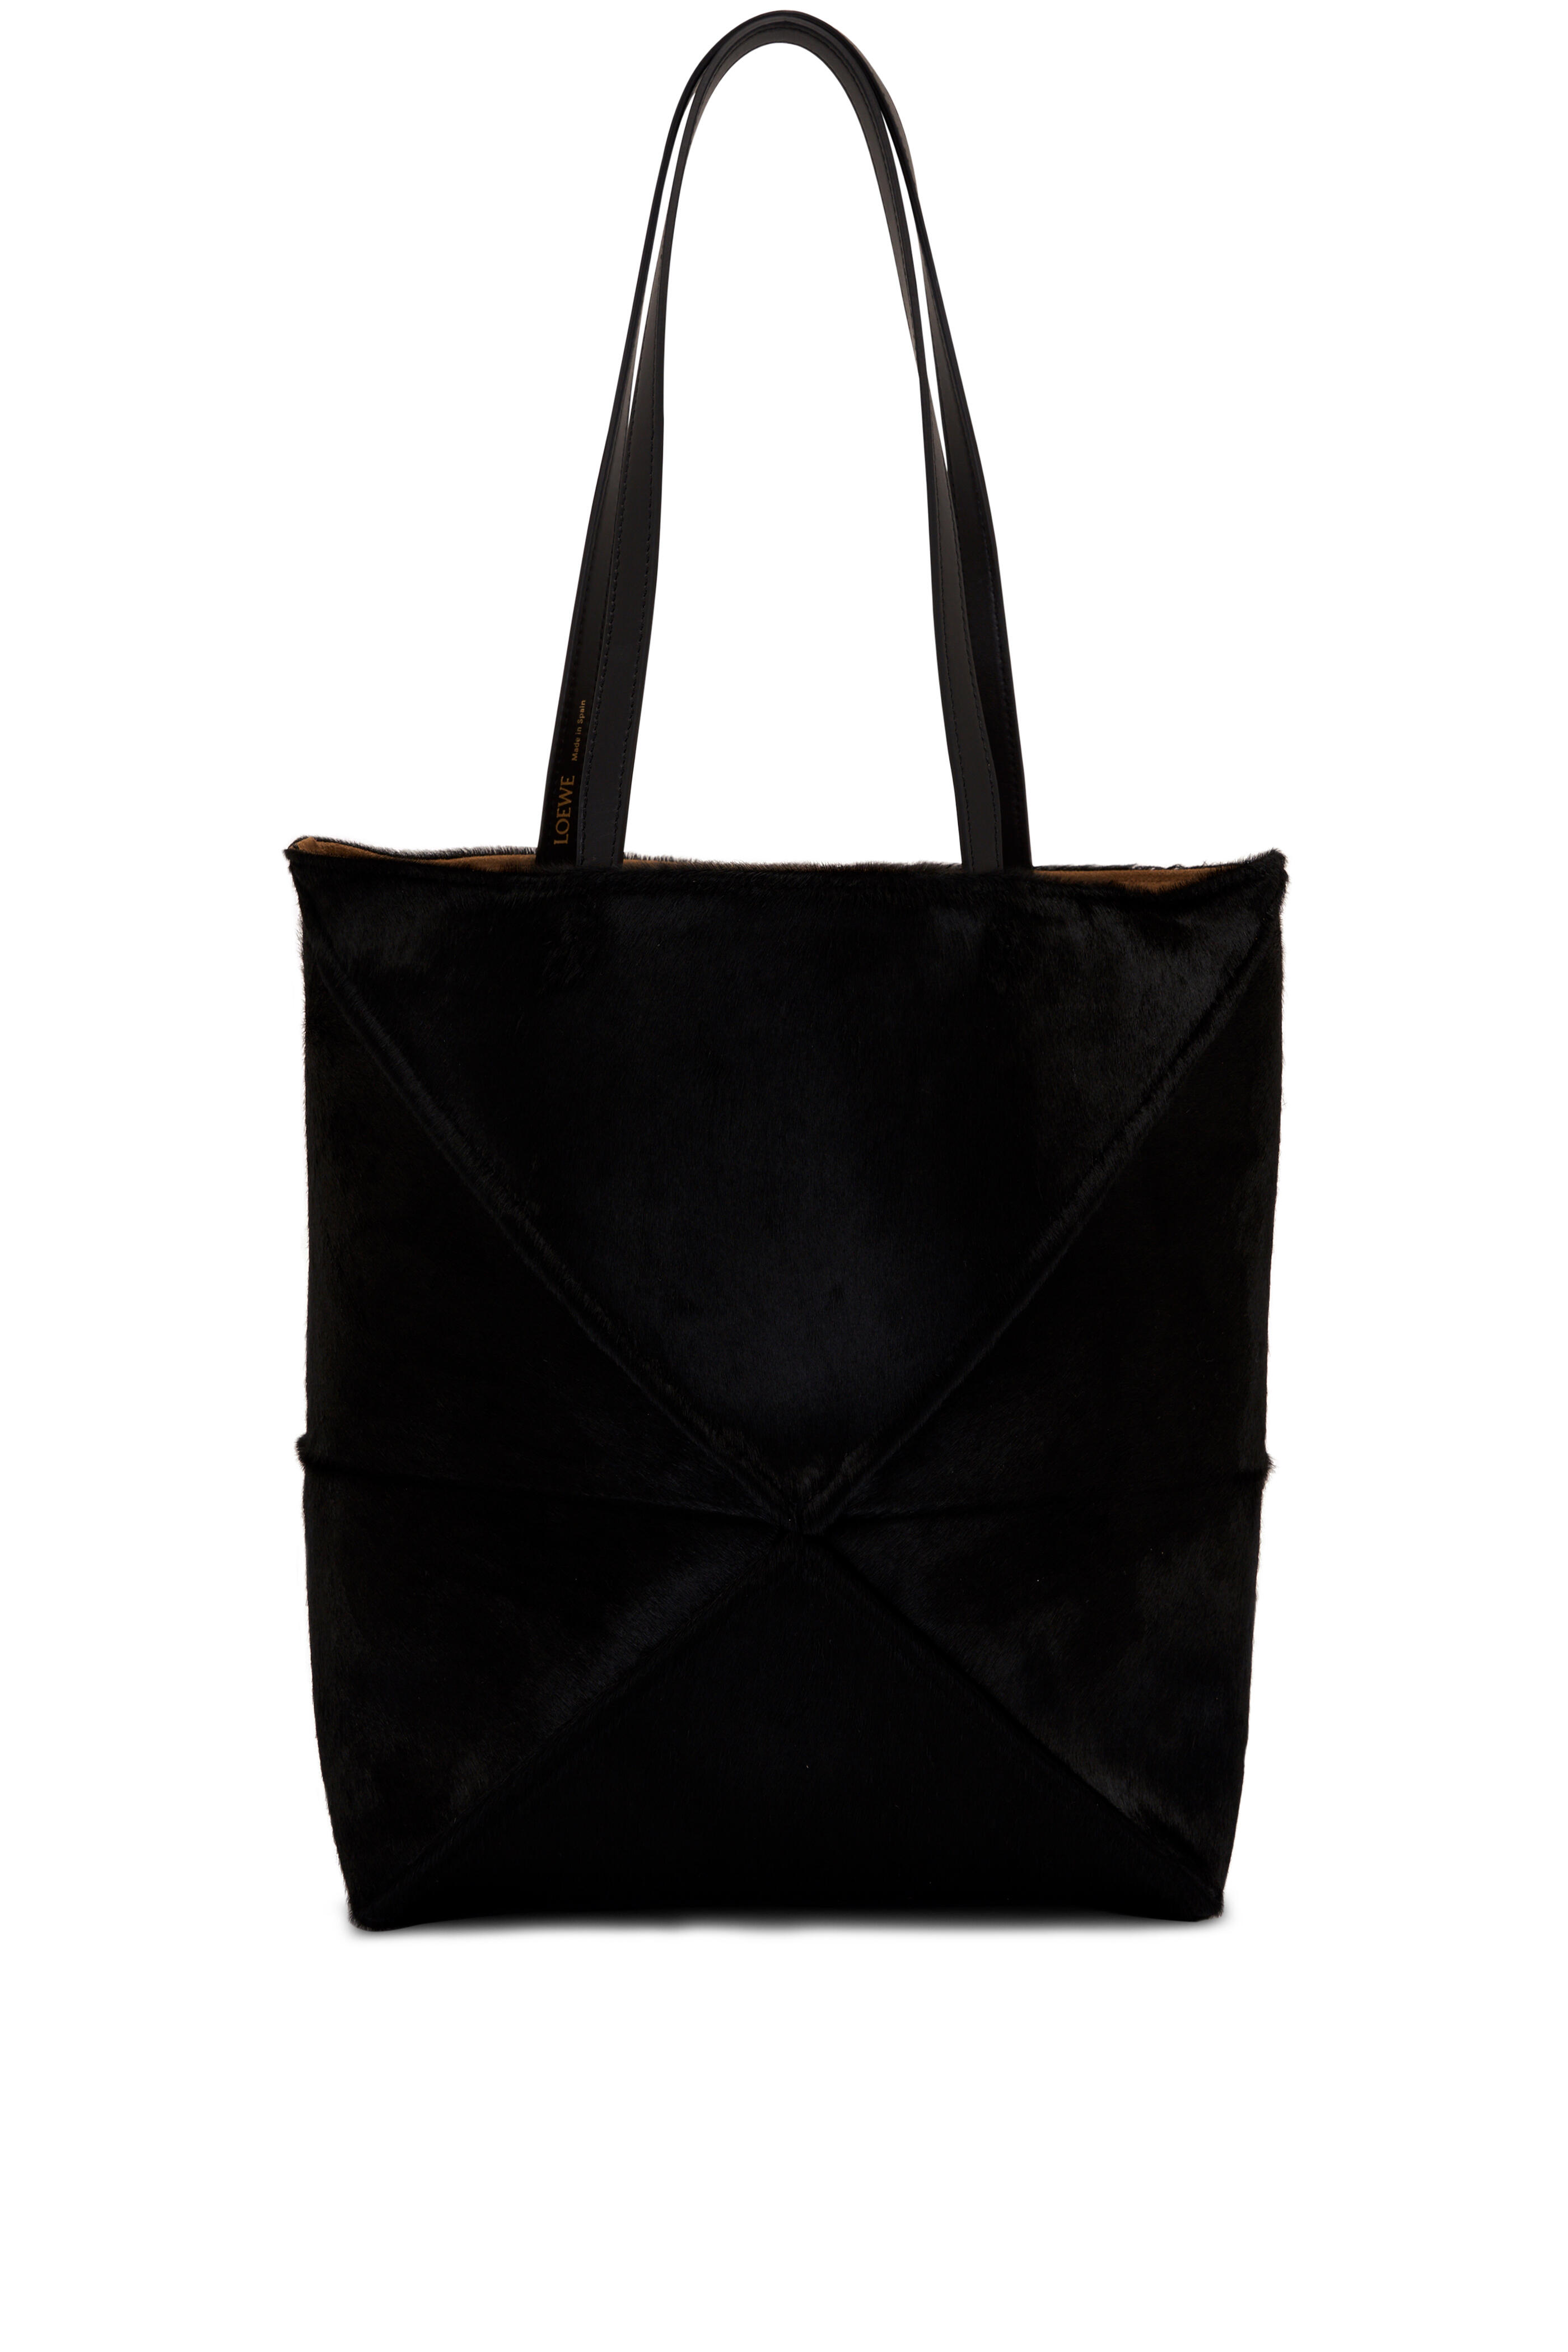 Puzzle Fold Medium Leather Tote Bag in Black - Loewe